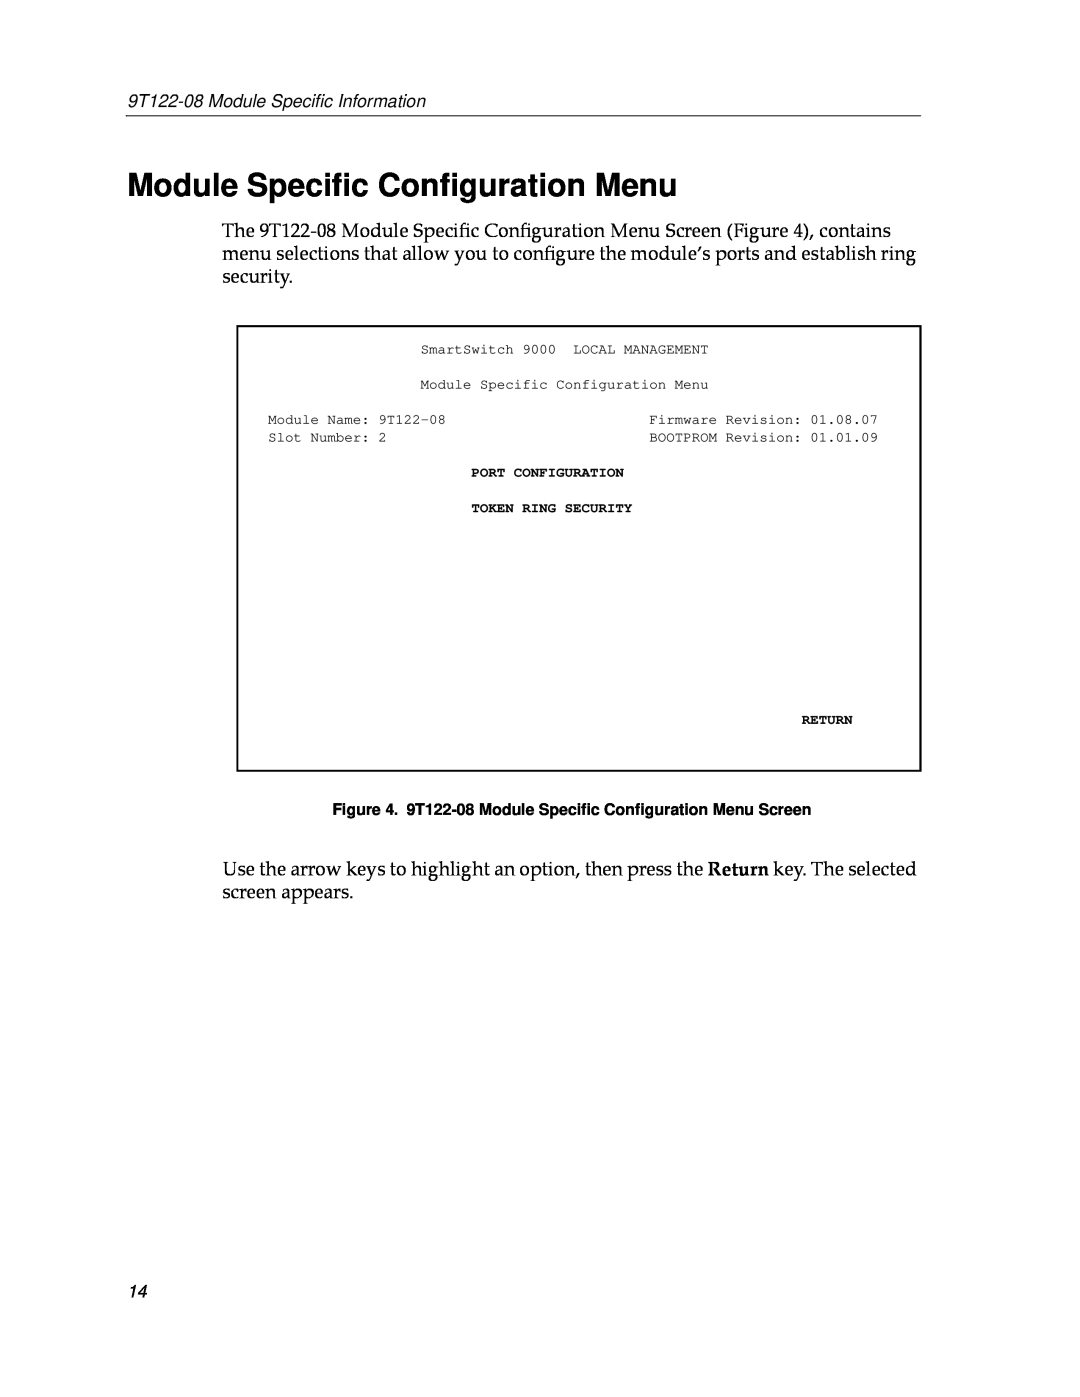 Cabletron Systems appendix 9T122-08 Module Speciﬁc Conﬁguration Menu Screen 